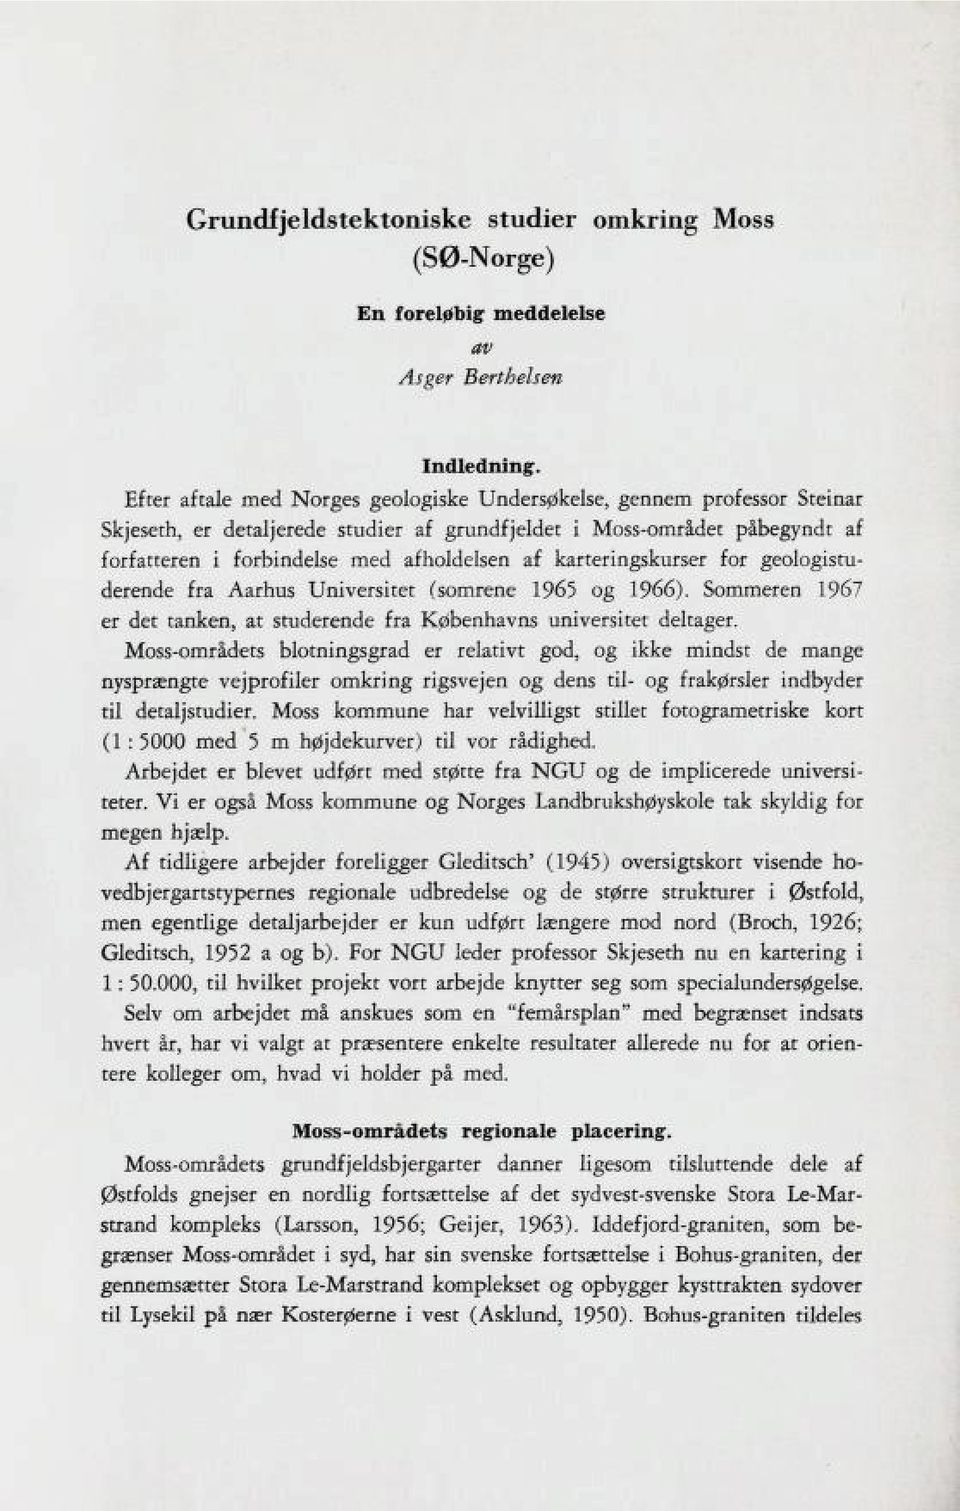 karteringskurser for geologistu derende fra Aarhus Universitet (somrene 1965 og 1966). Sommeren 1967 er det tanken, at studerende fra Københavns universitet deltager.